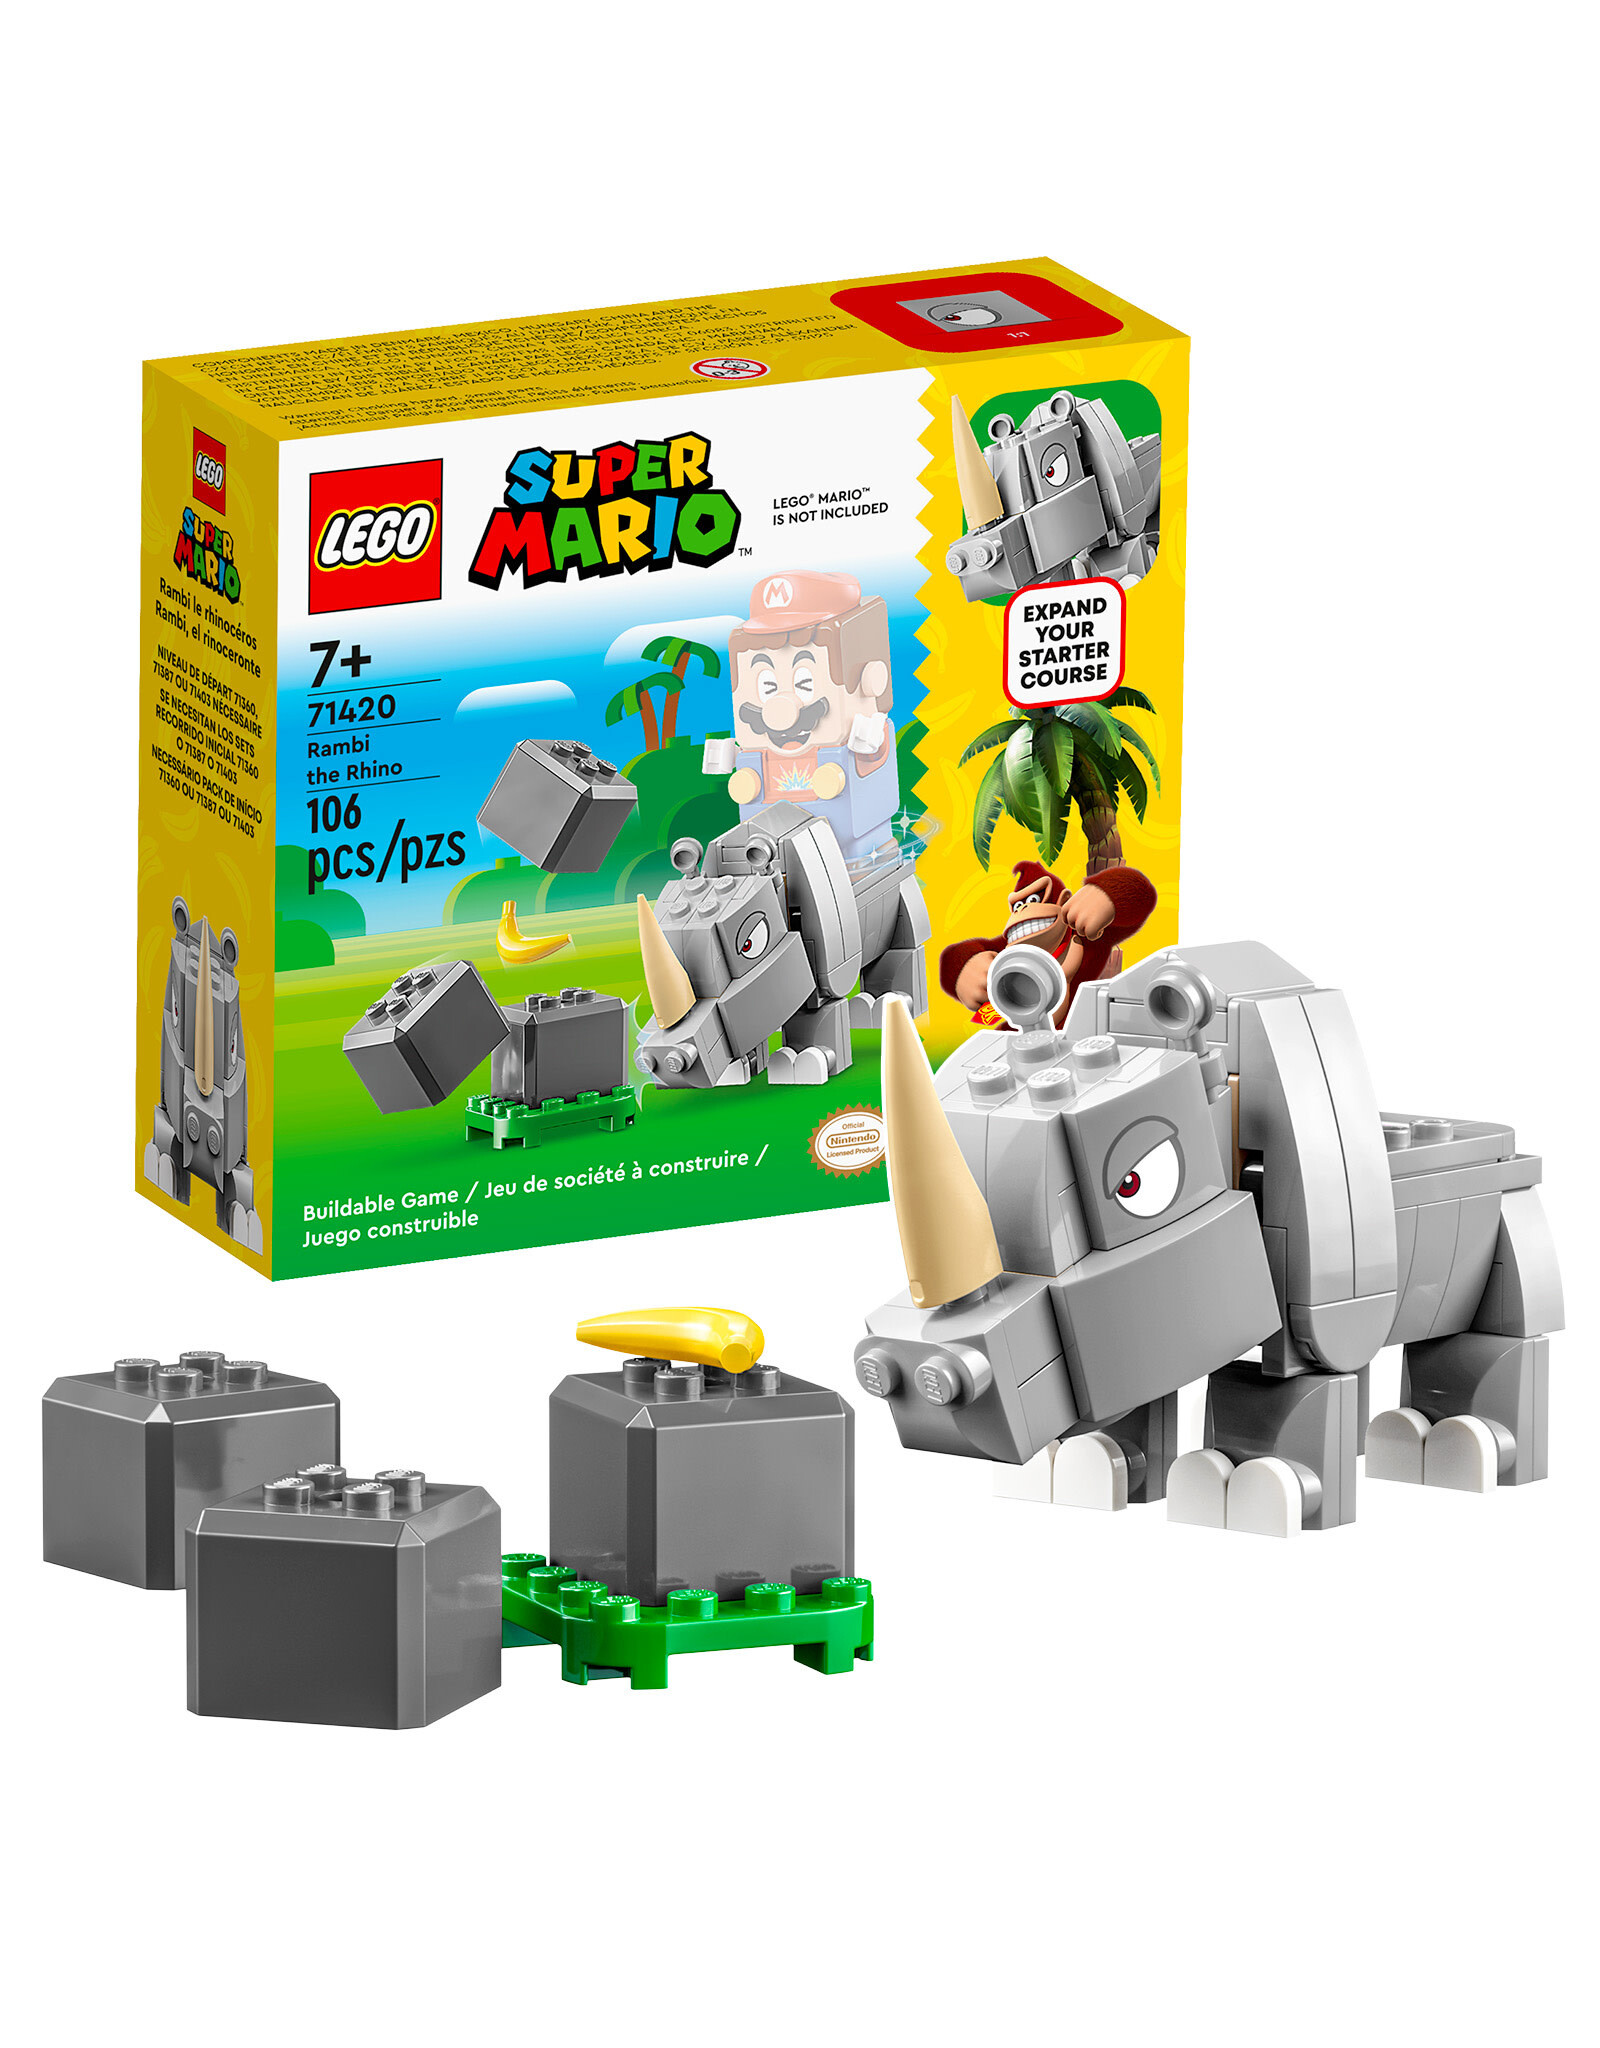 Lego Rambi the Rhino Expansion Set